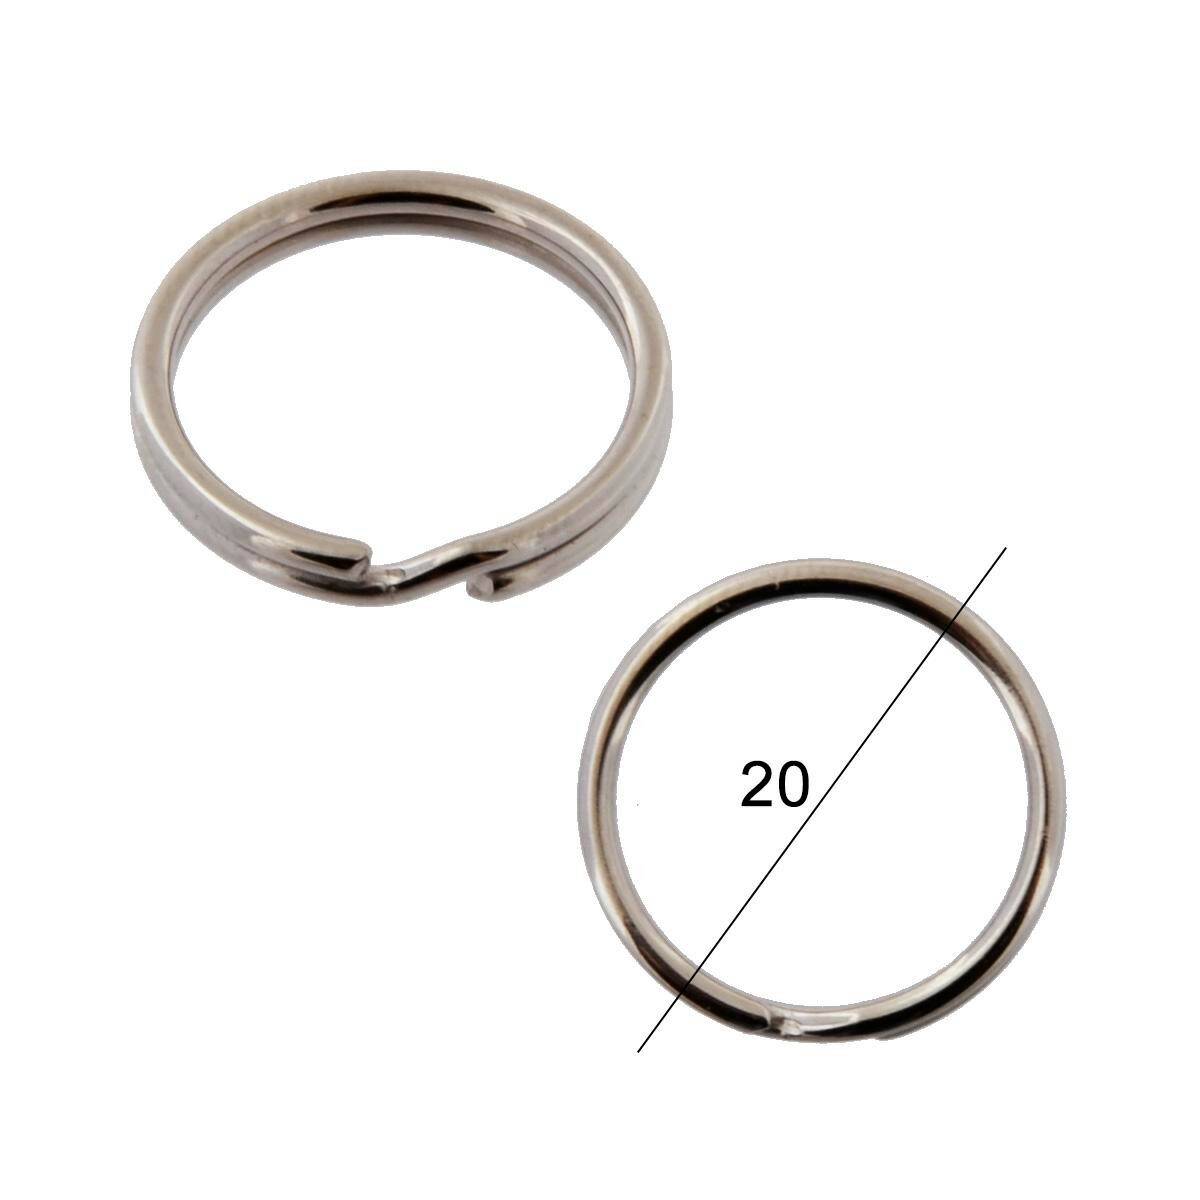 Key rings standard - diameter 20mm